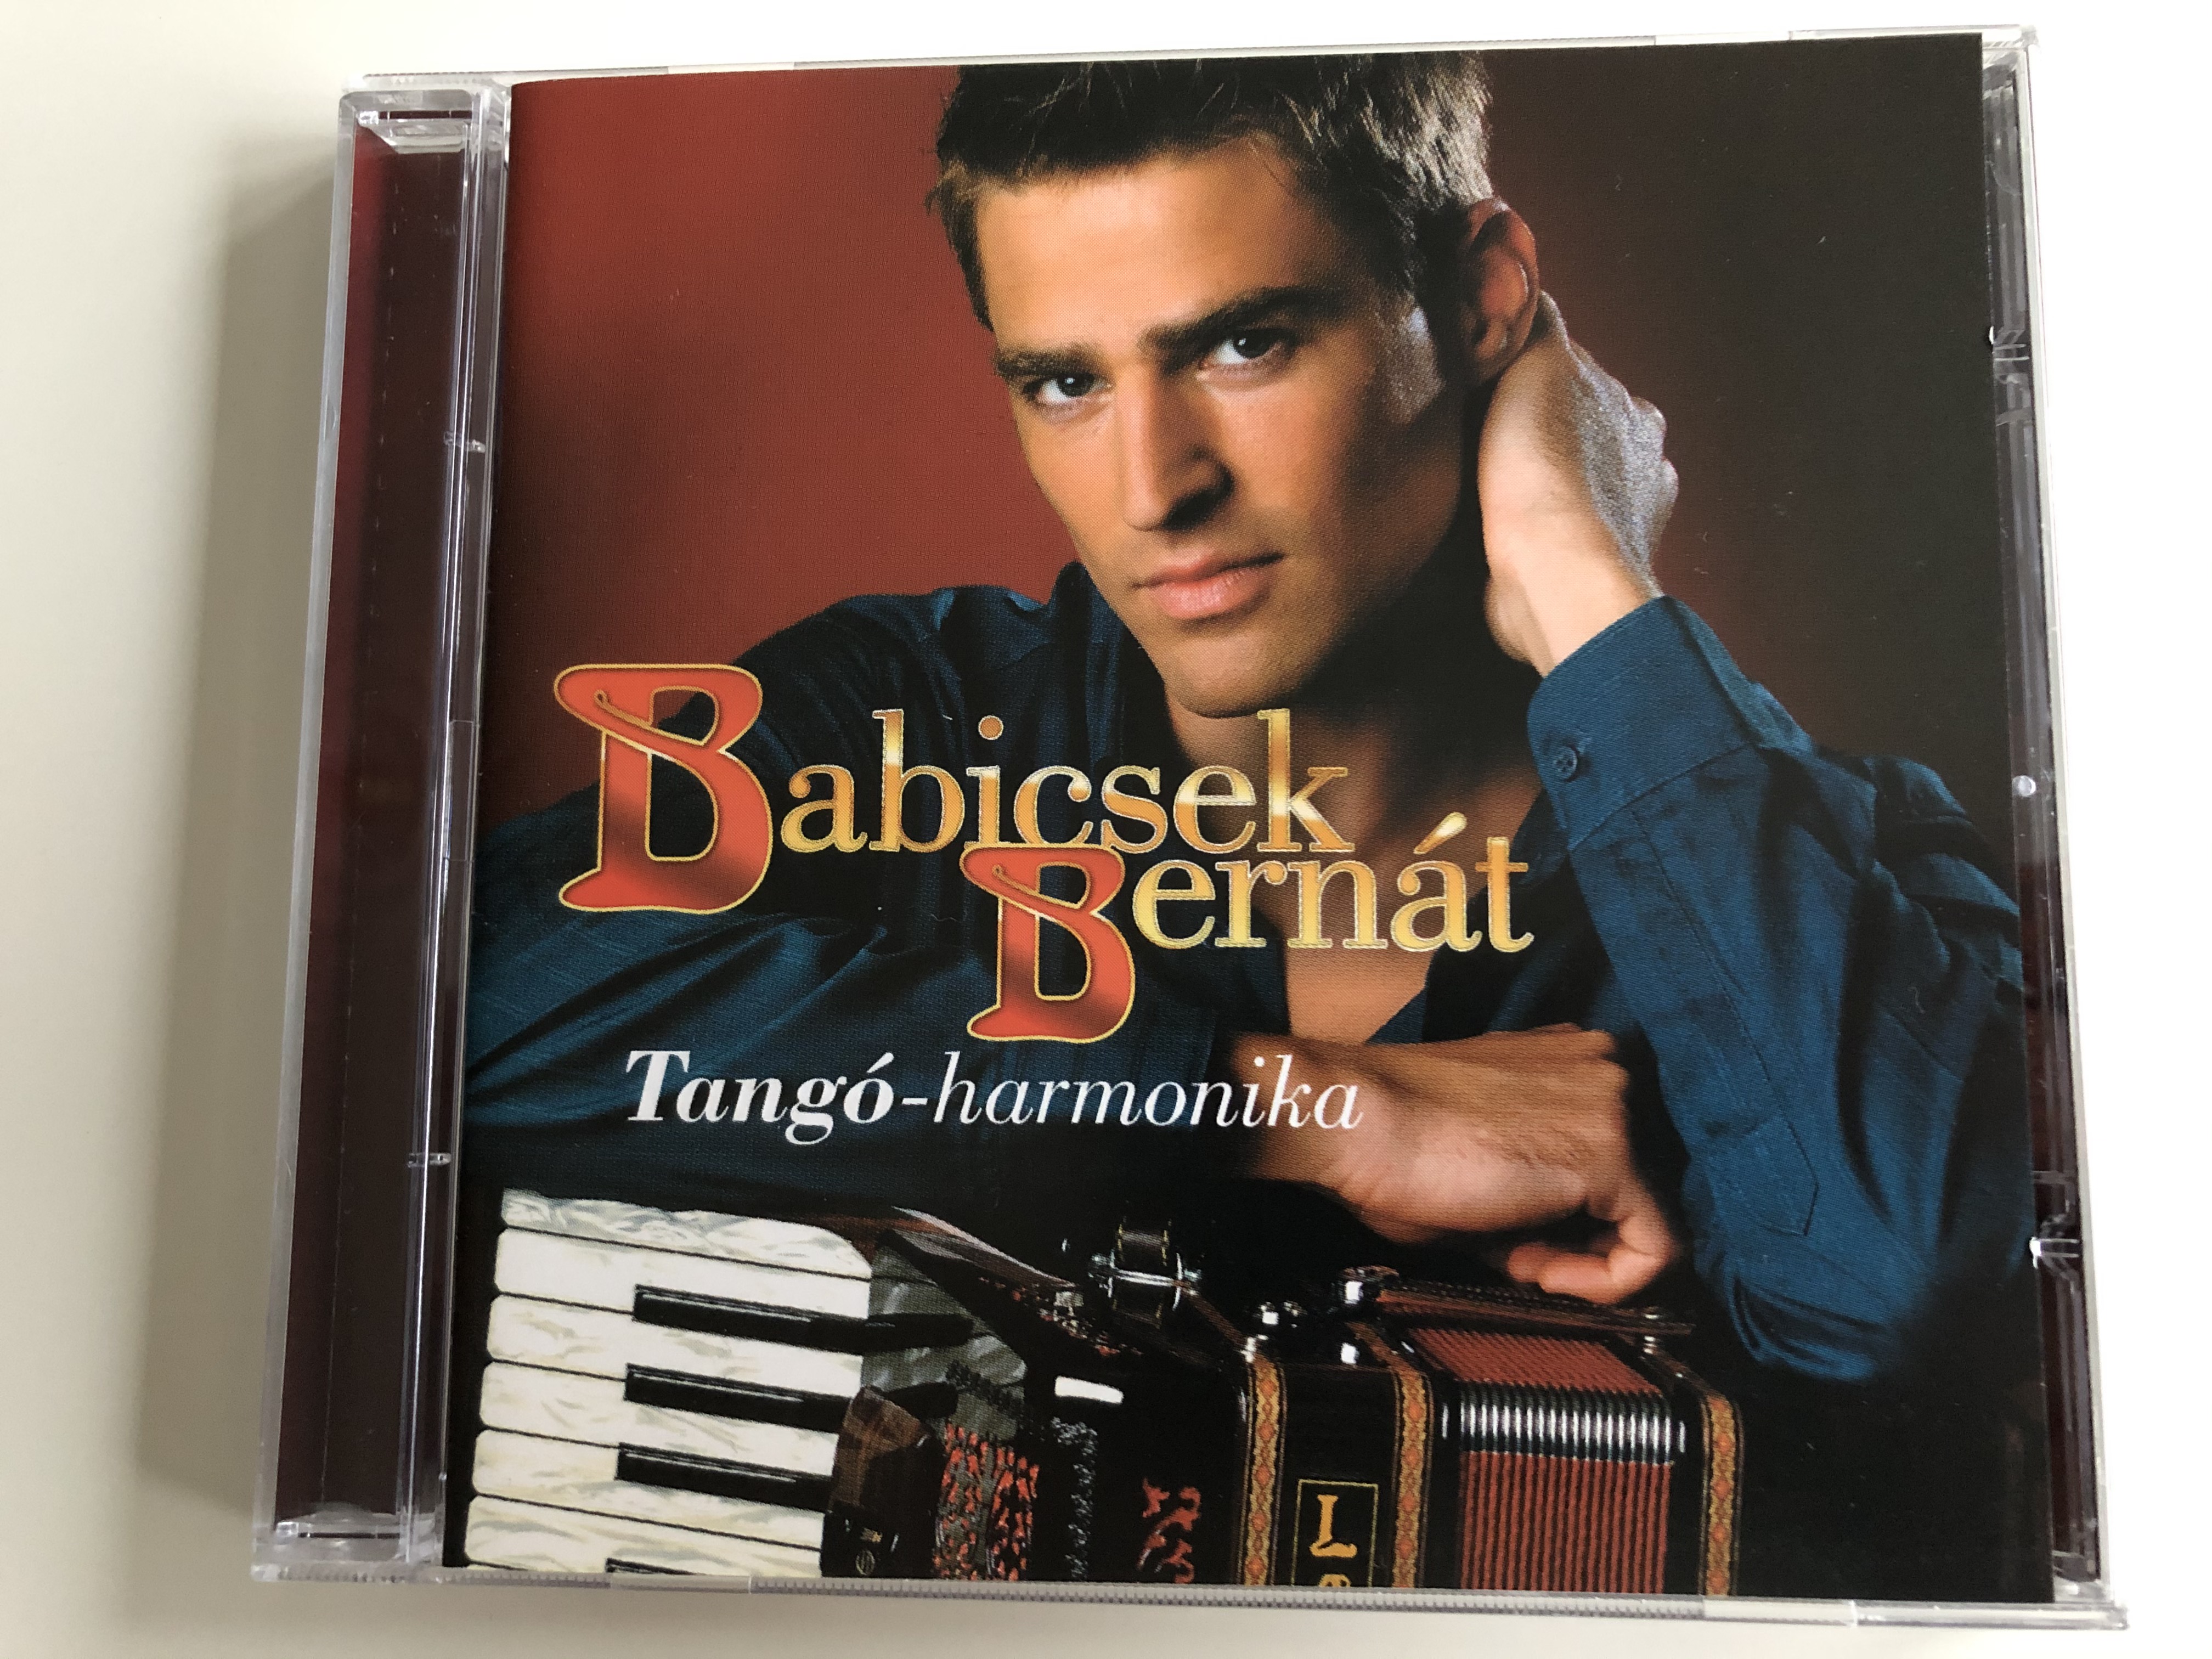 babicsek-bern-t-tang-harmonika-sony-bmg-music-entertainment-audio-cd-2006-886970260626-1-.jpg